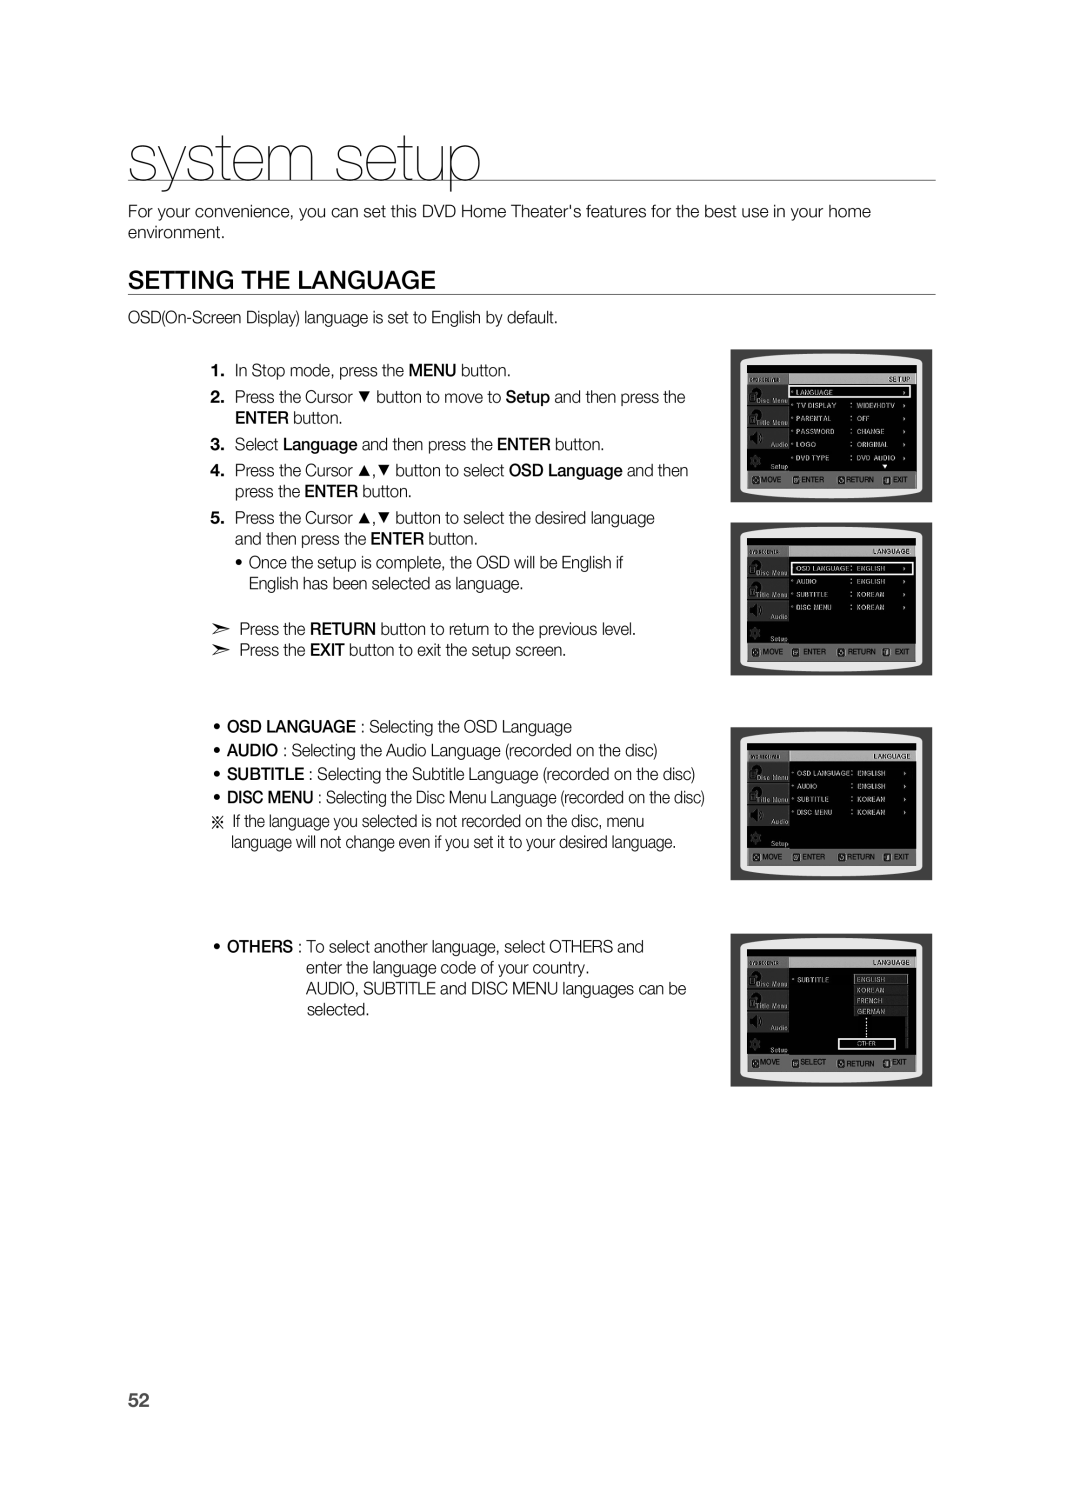 Samsung HT-Z510 manual system setup, Setting the Language 